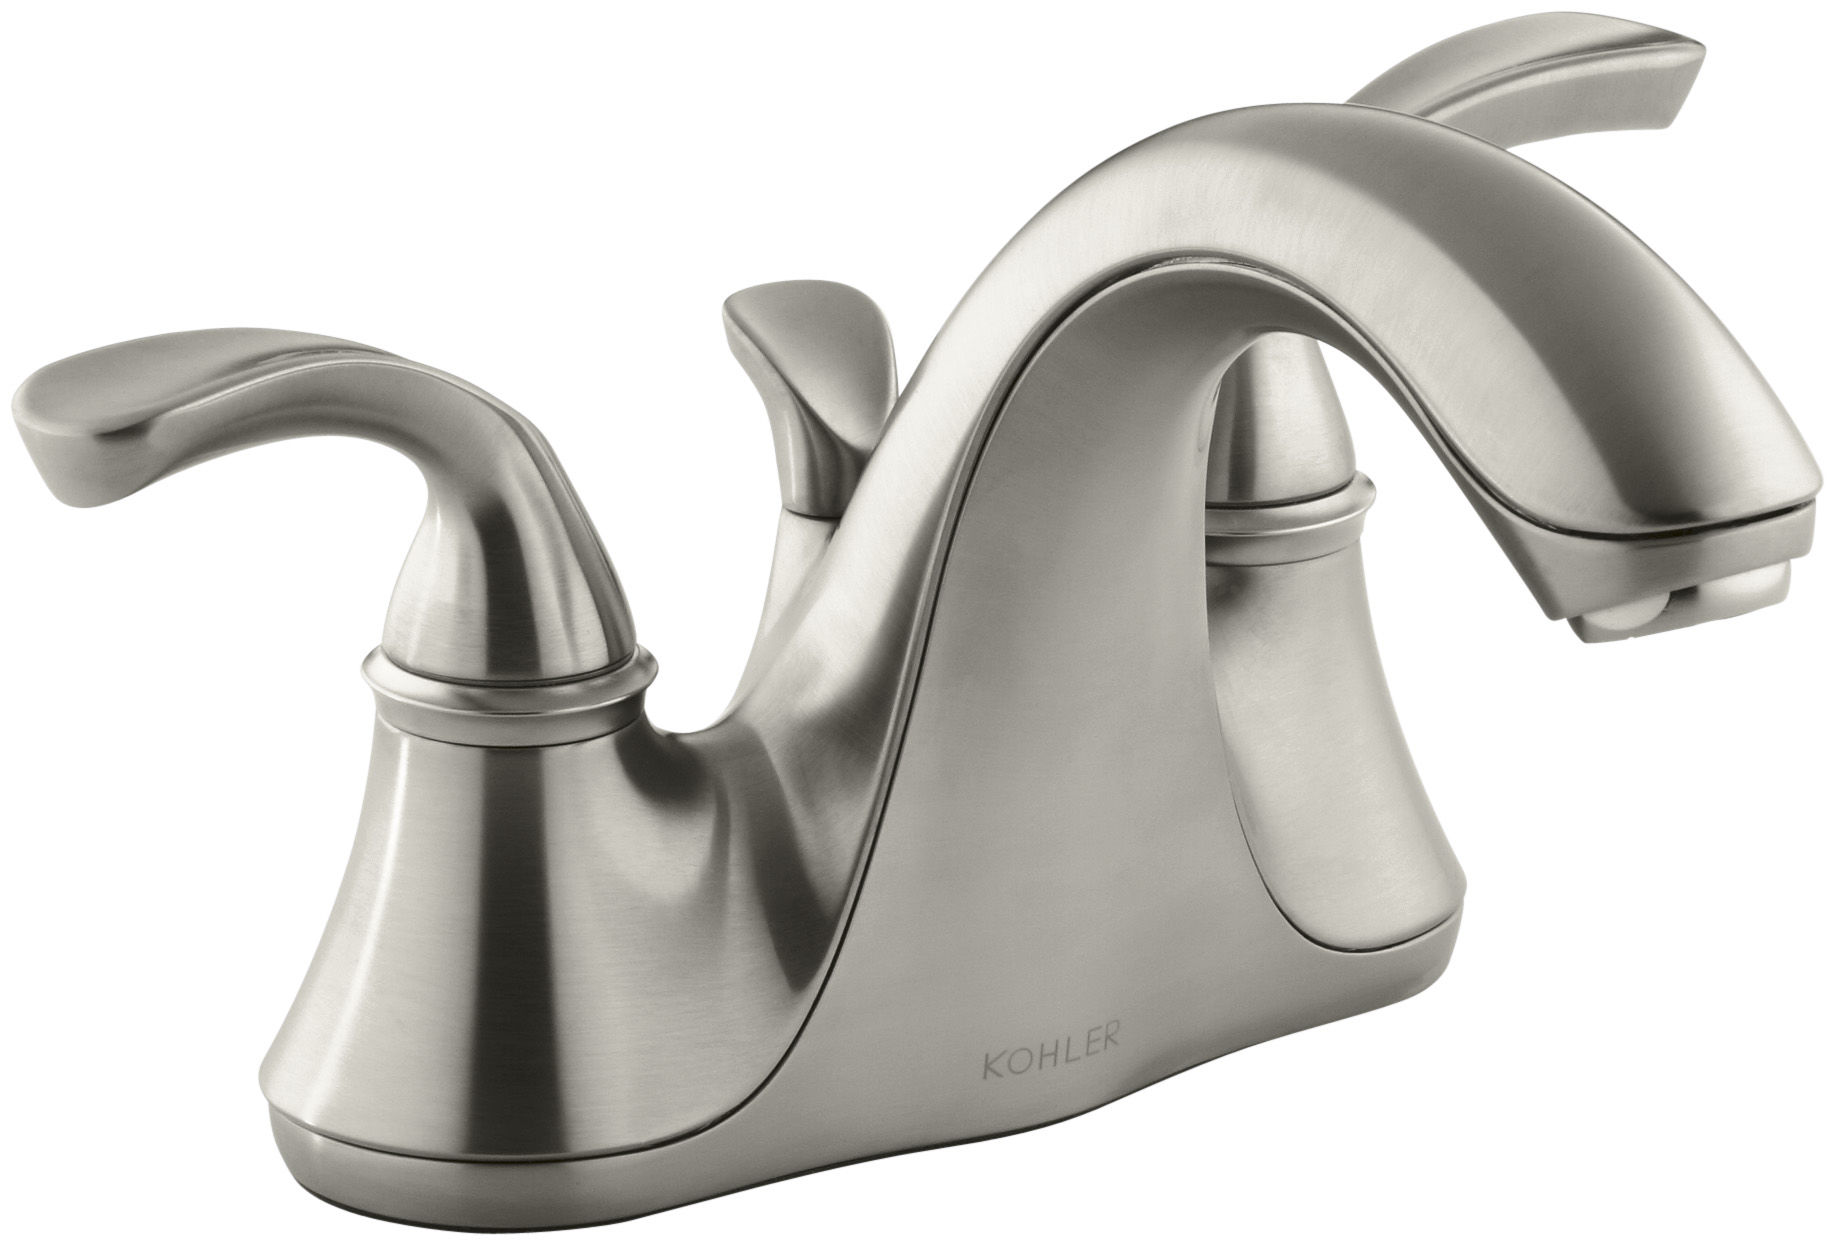 koheler forte bathroom sink faucet specs single handle